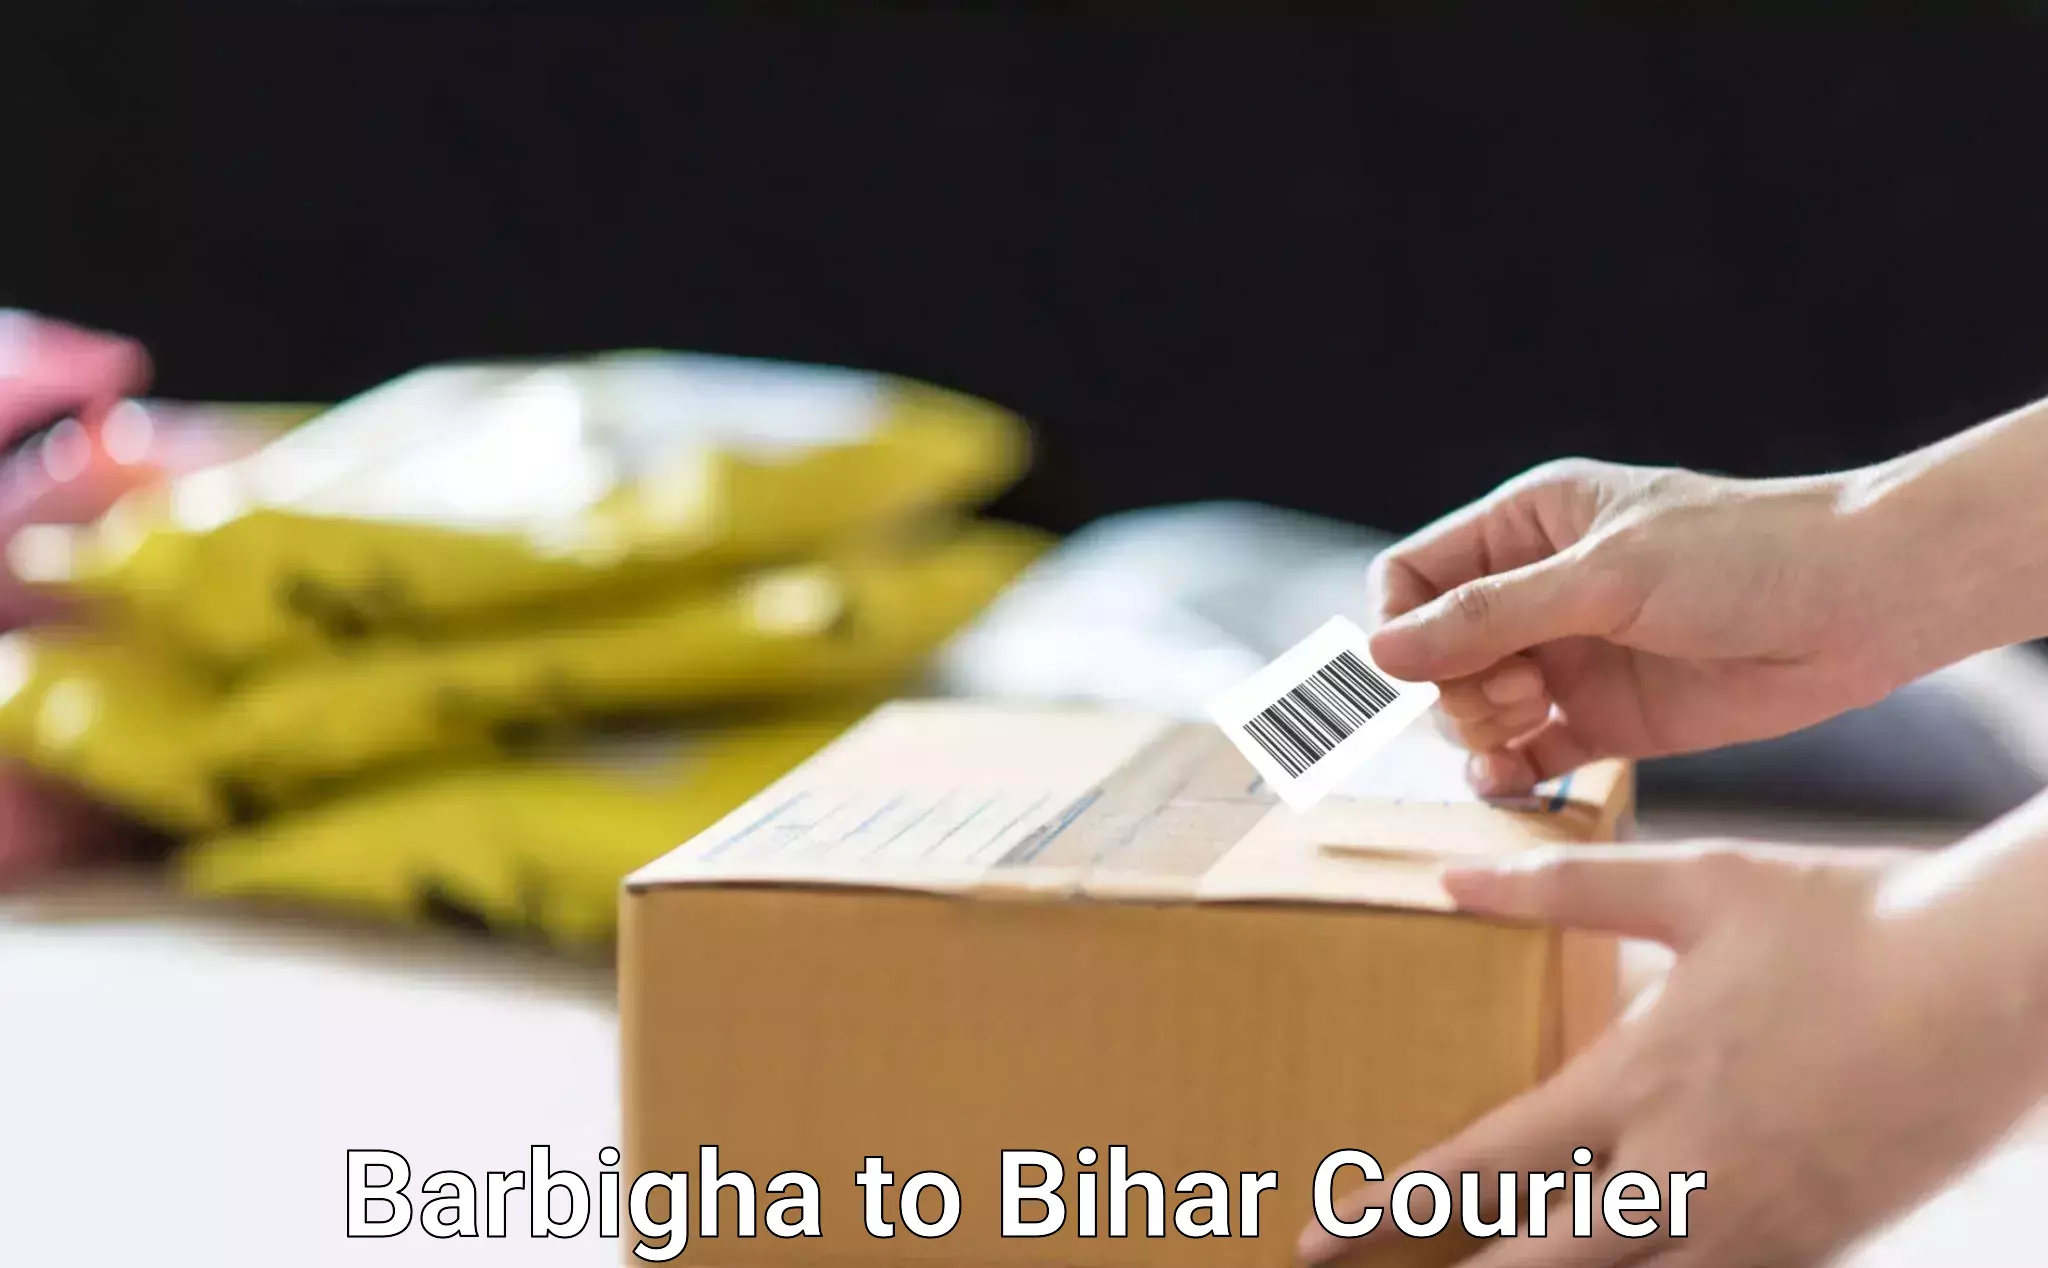 Professional moving company Barbigha to Sultanganj